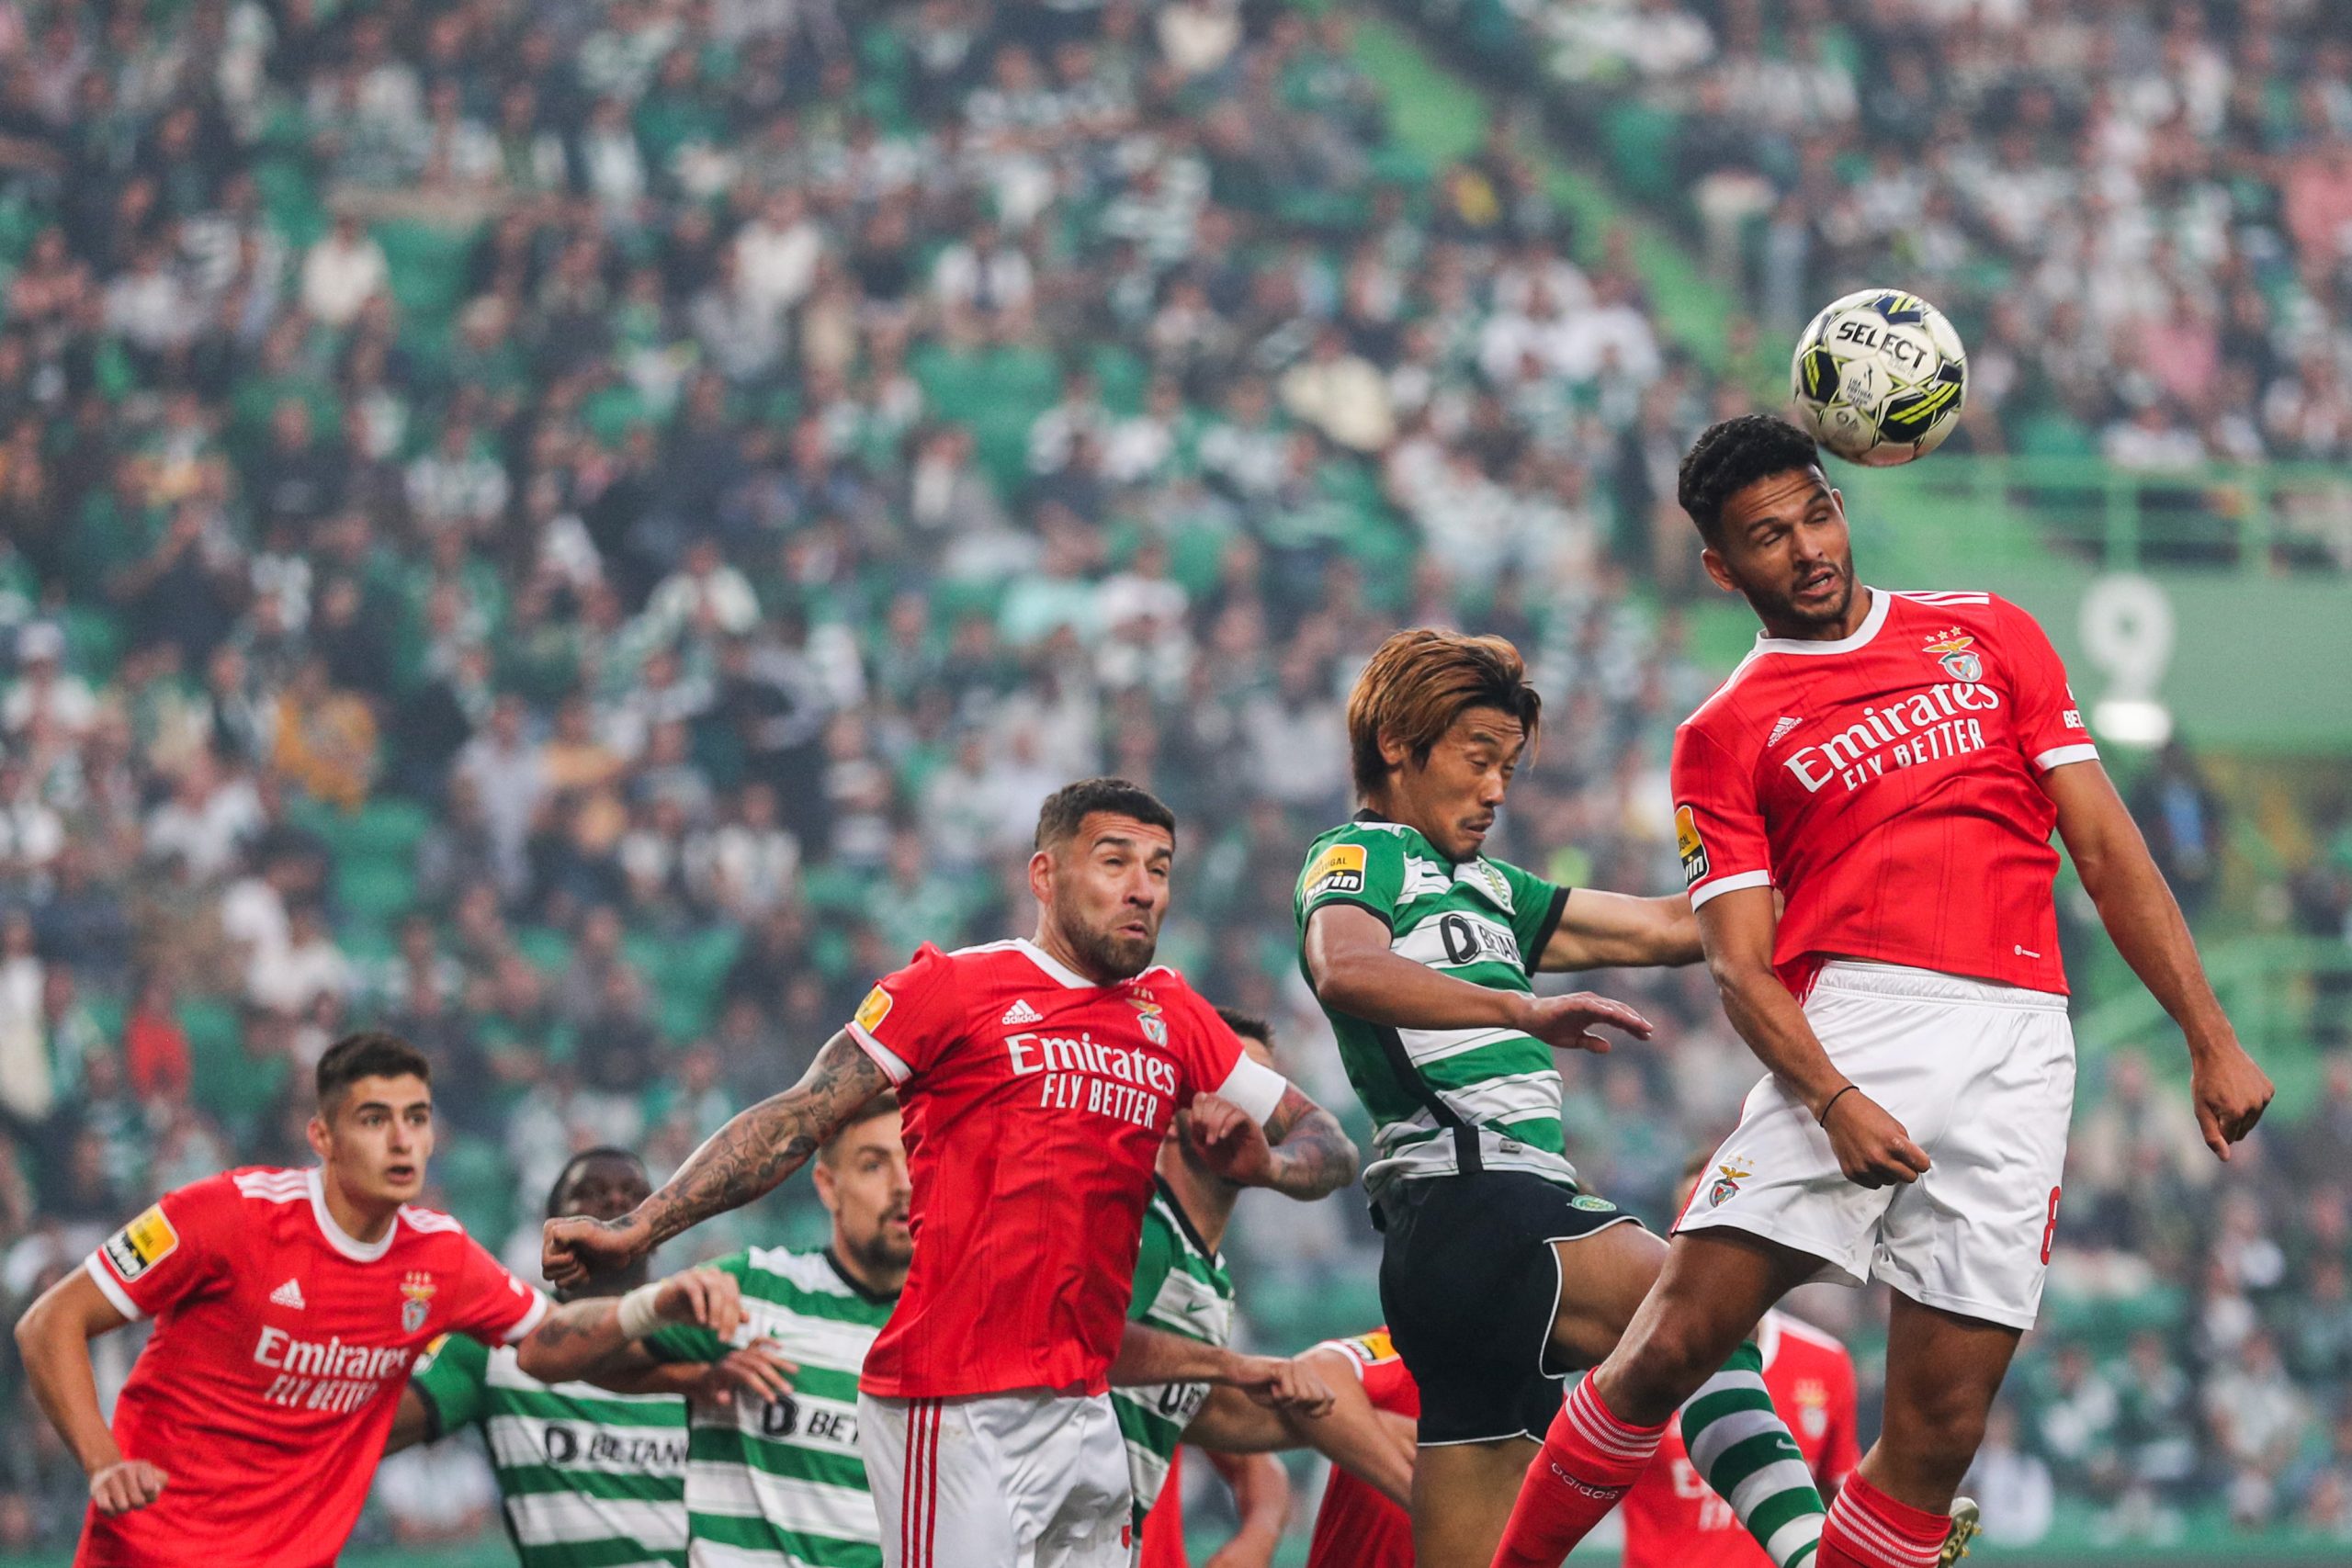 Benfica's Portuguese forward Goncalo Ramos (R) heads the ball next to Sporting's Japanese midfielder Hidemasa Morita.